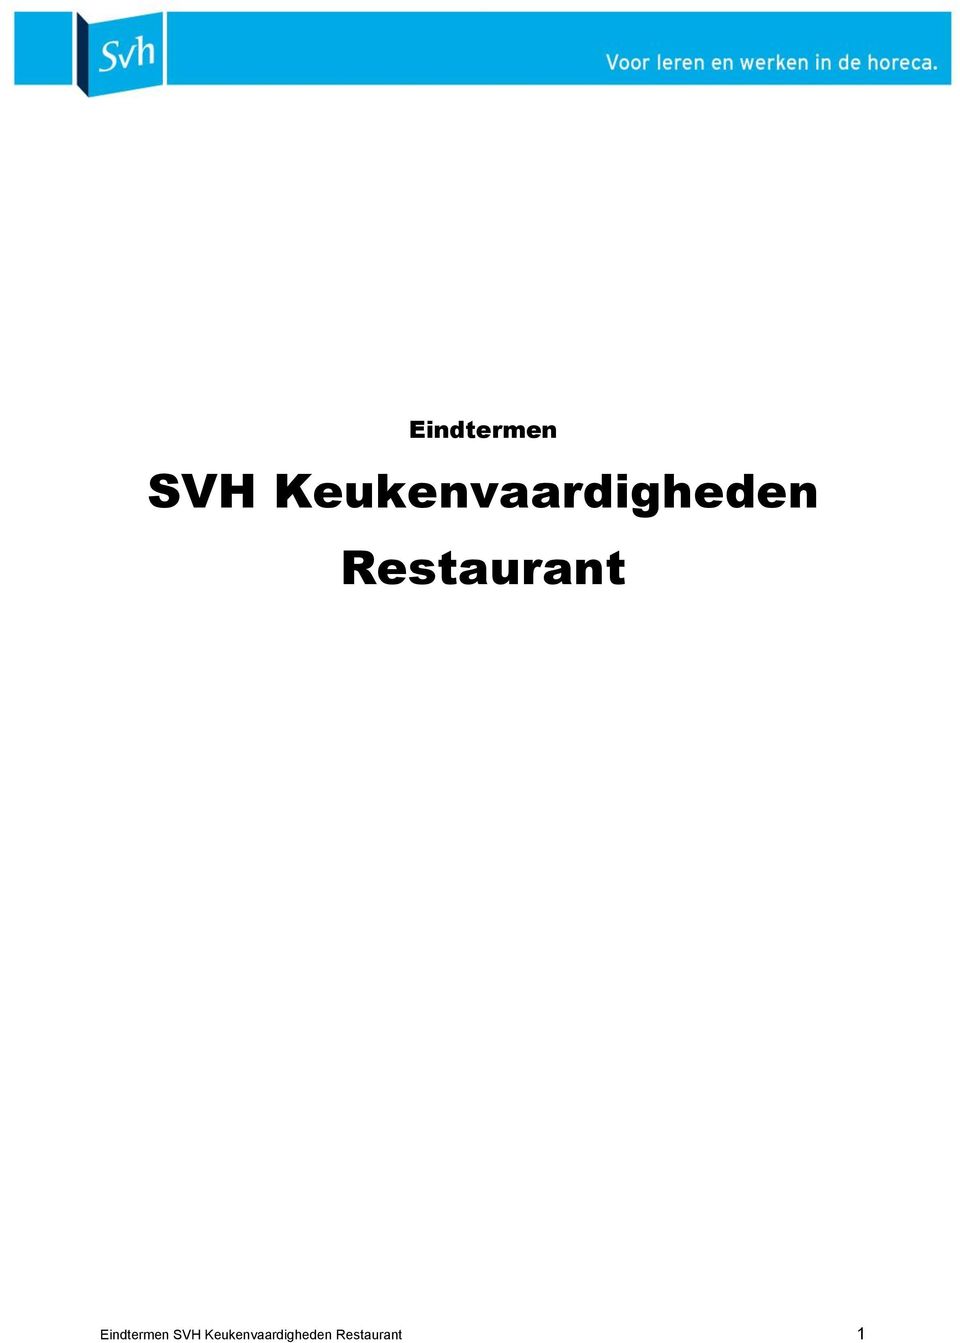 Restaurant  